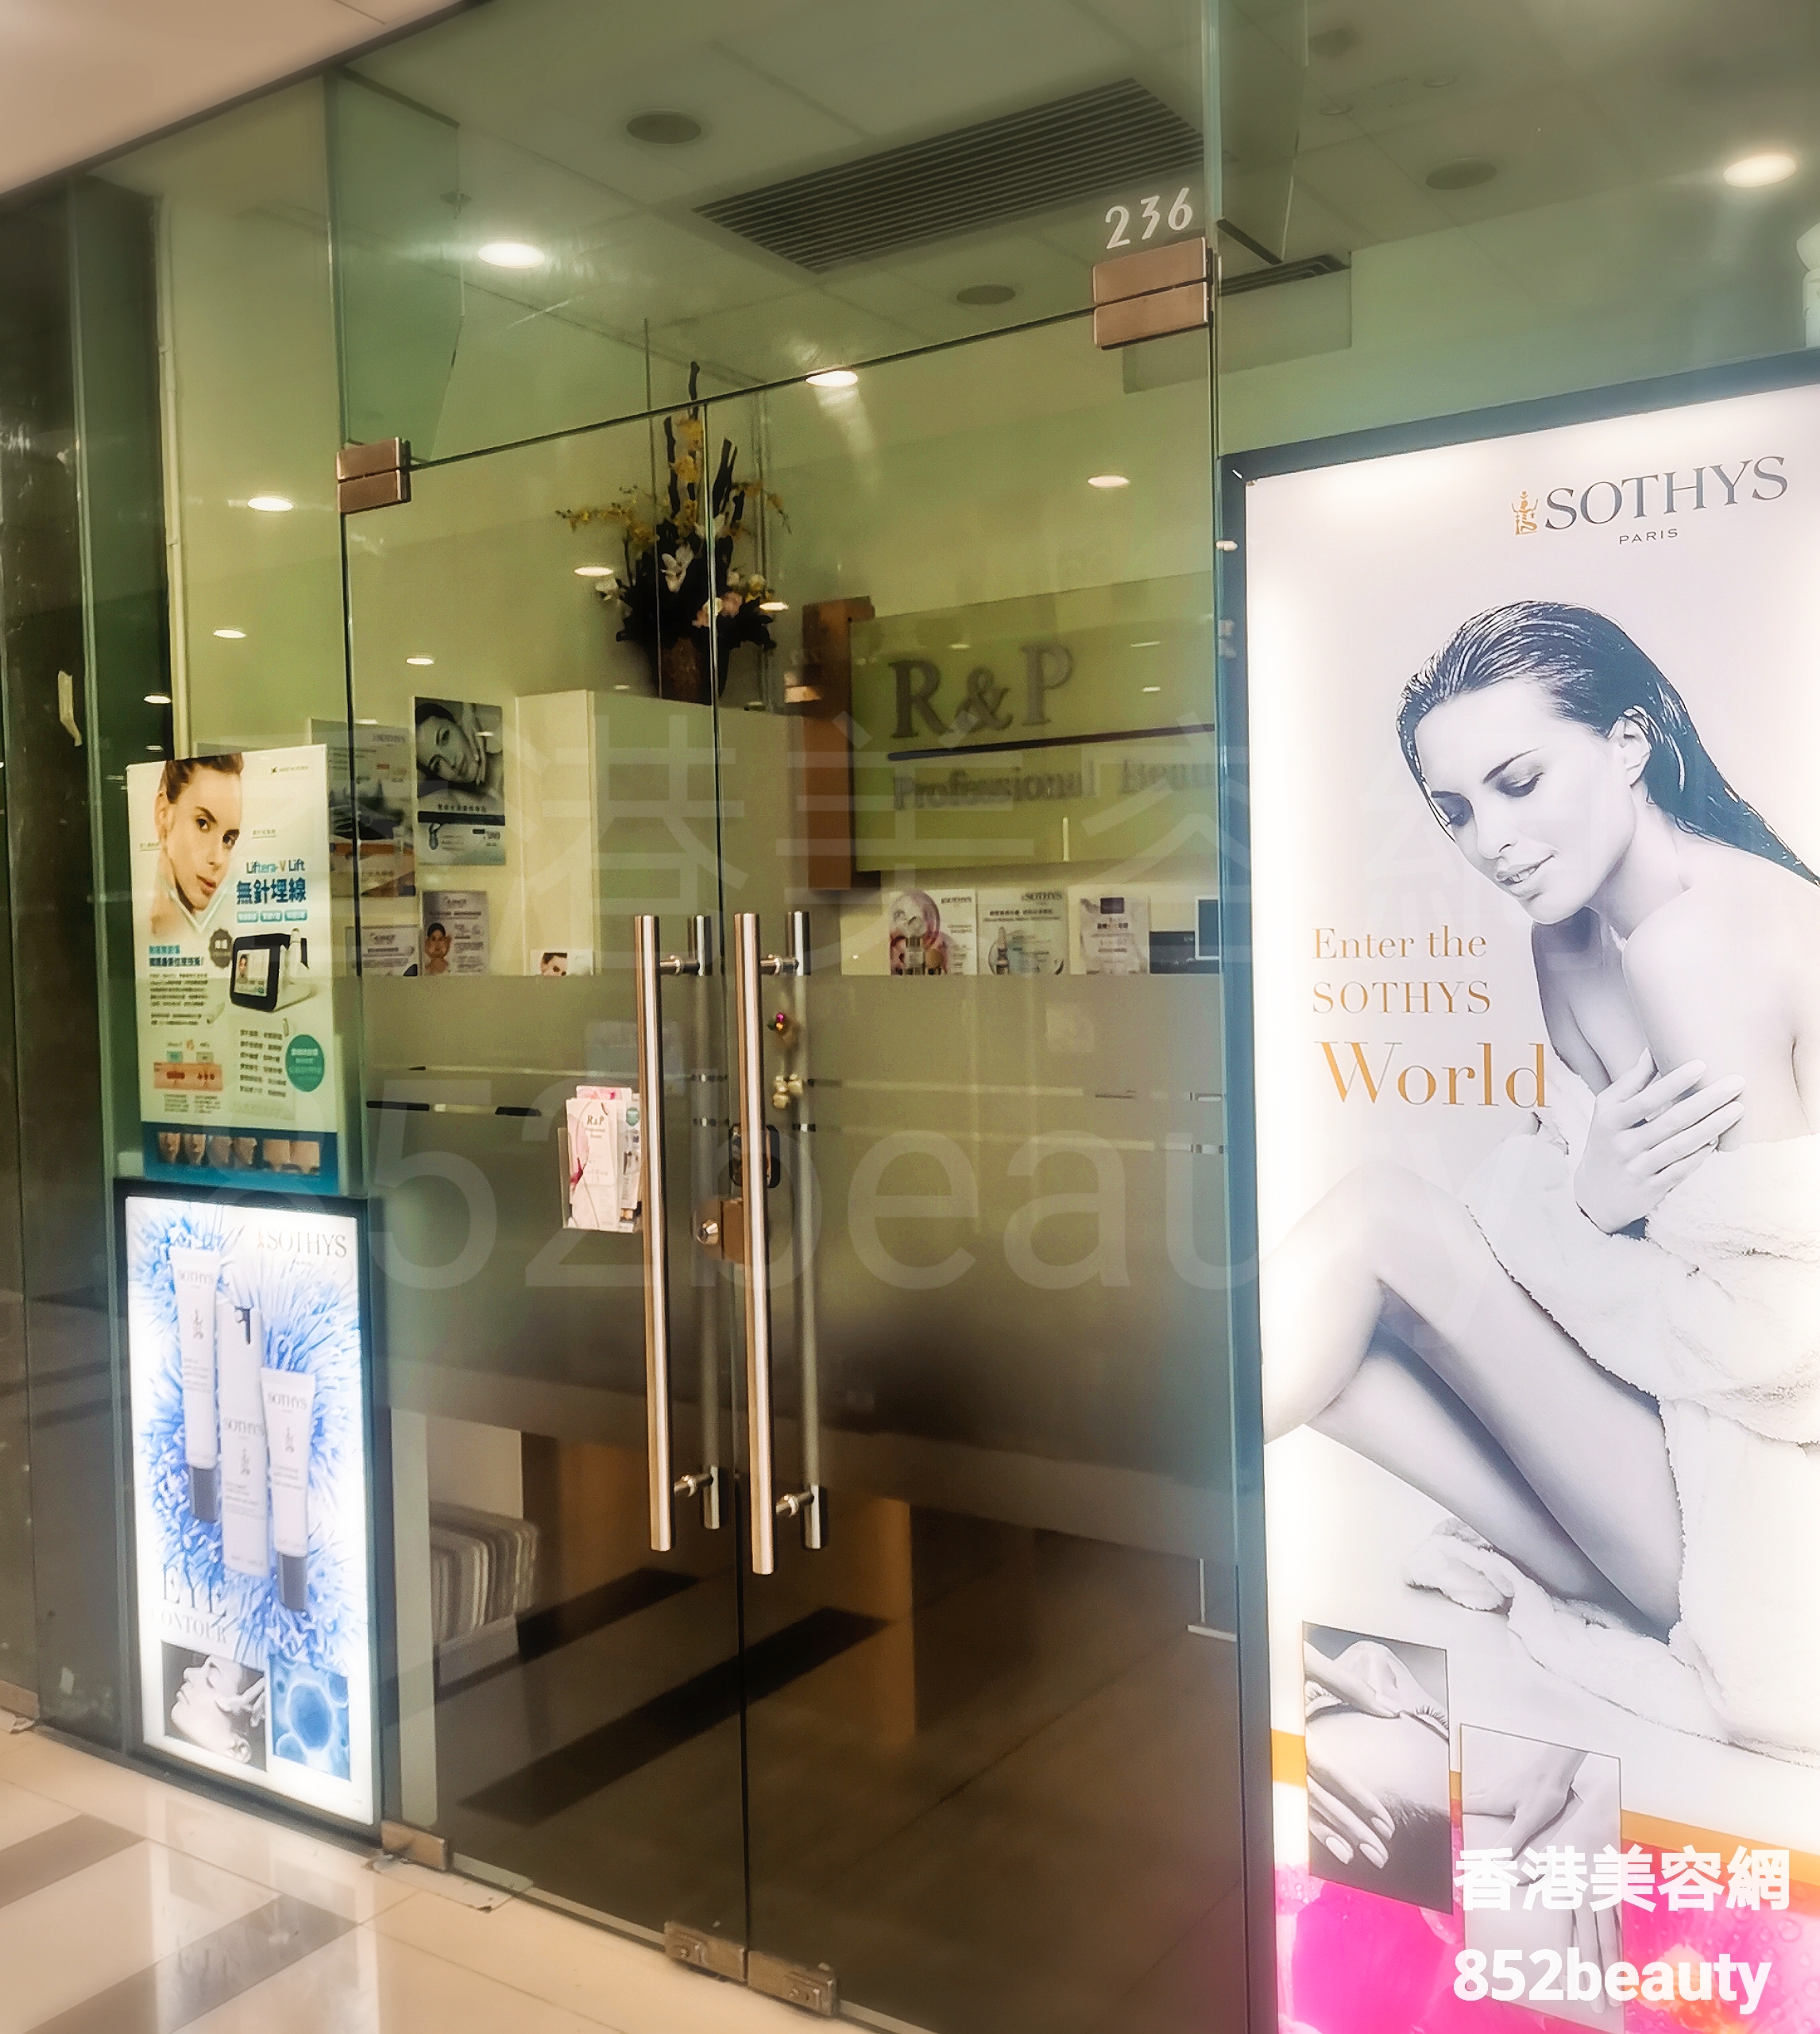 香港美容網 Hong Kong Beauty Salon 美容院 / 美容師: R&P Professional Beauty (沙田店)